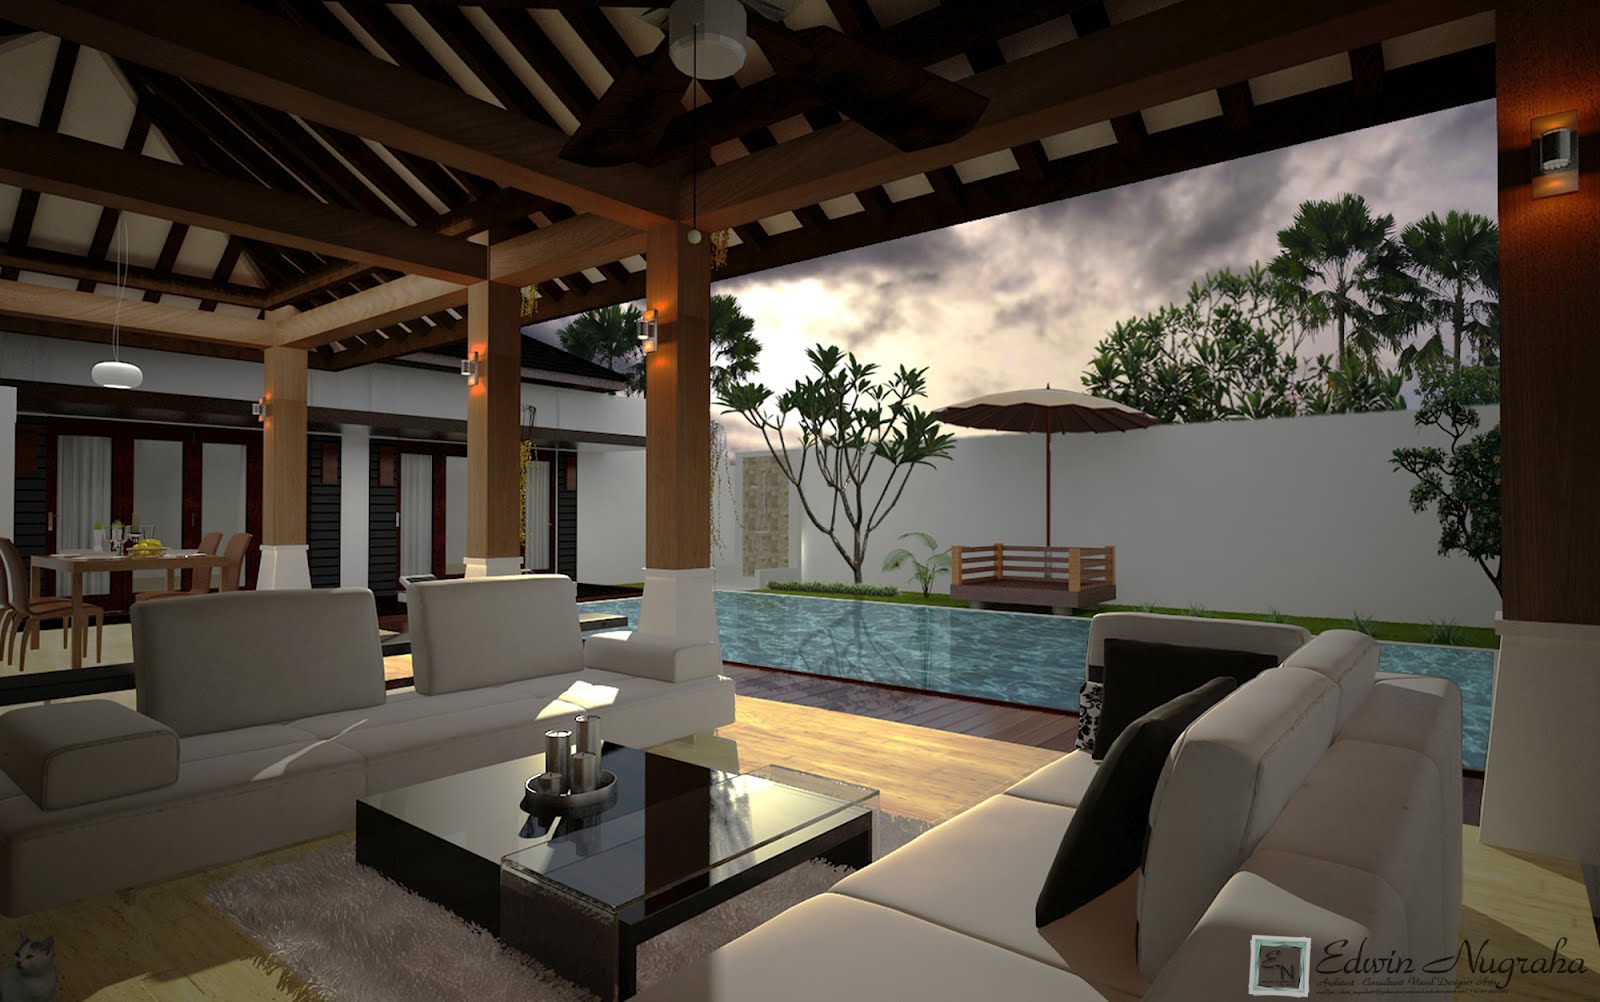  Bali  Agung Property Download Kumpulan Desain Tropical Villa